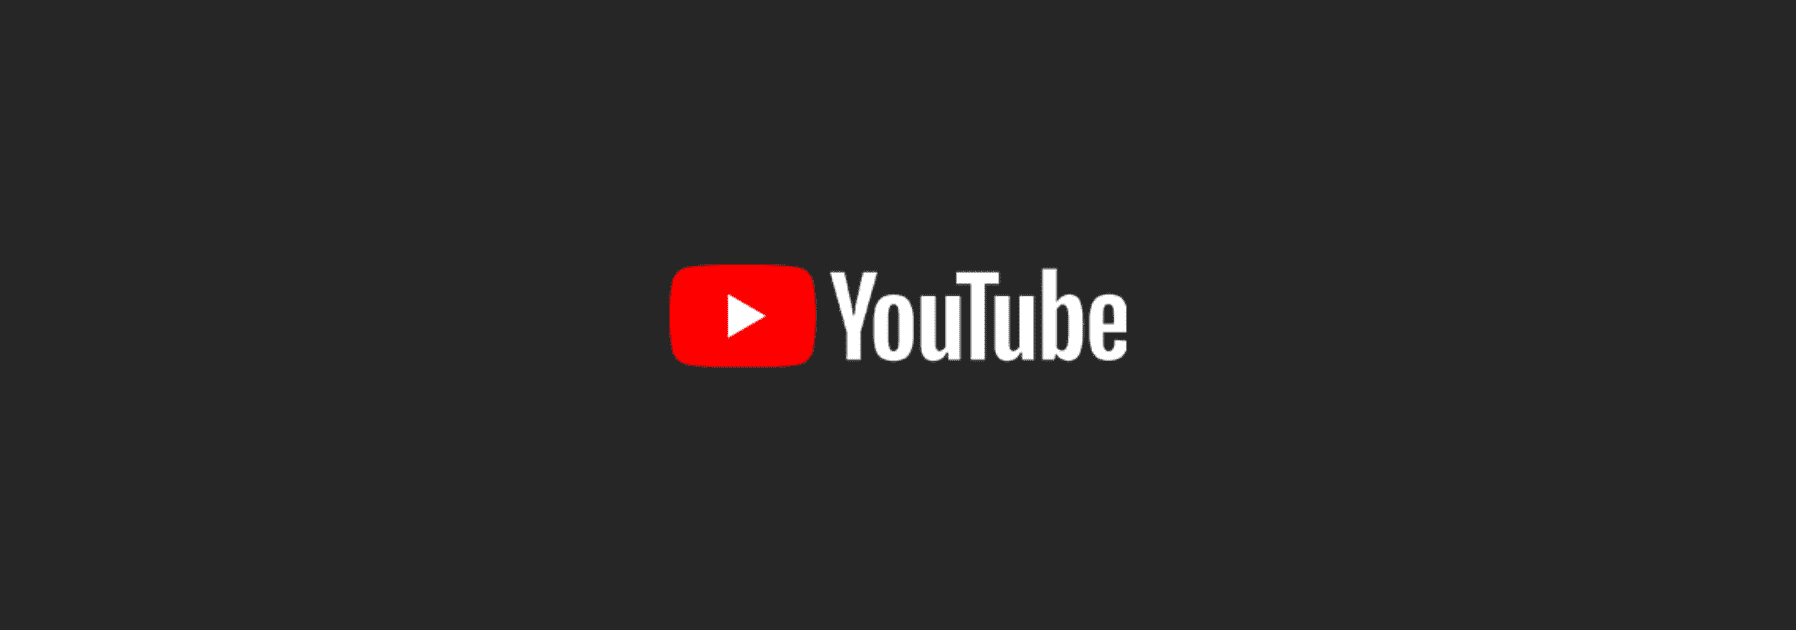 Как раскрутить канал на YouTube